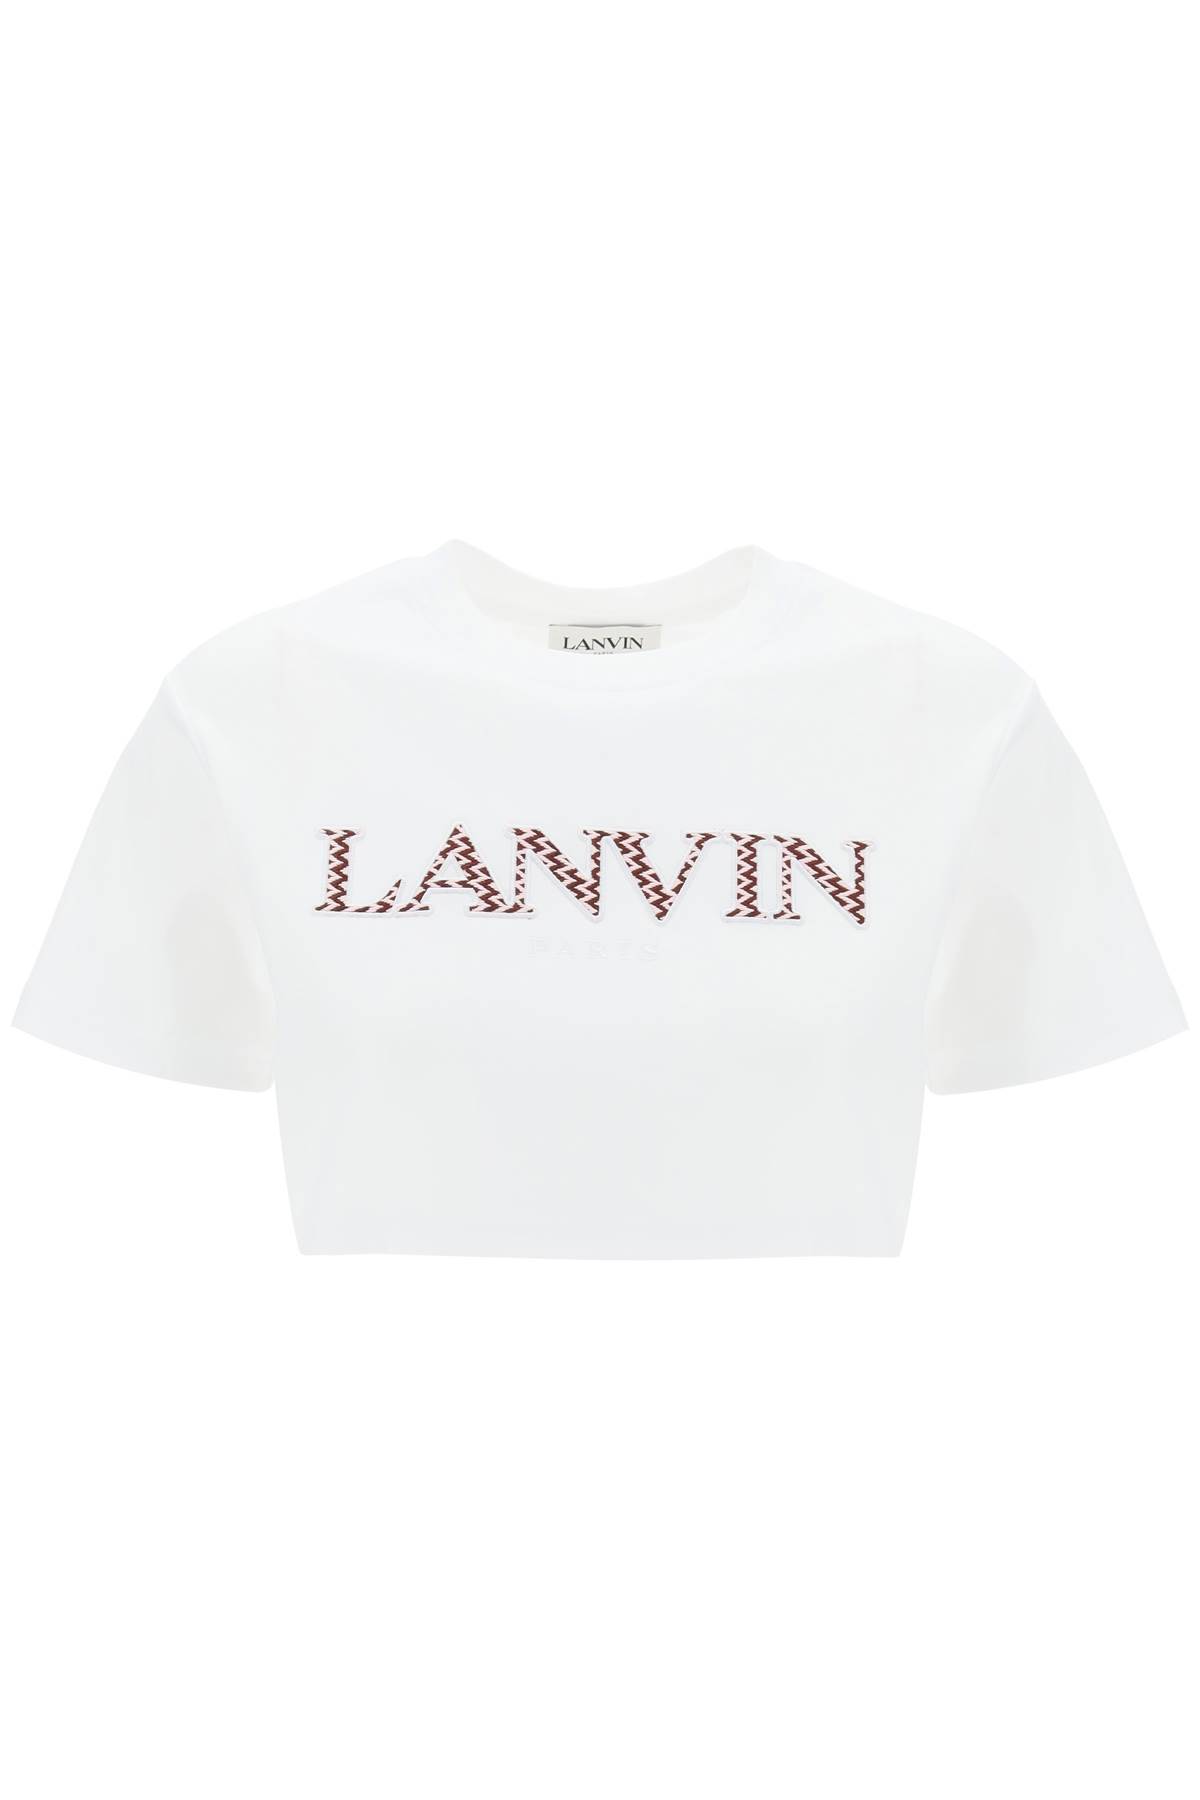 Lanvin LANVIN curb logo cropped t-shirt